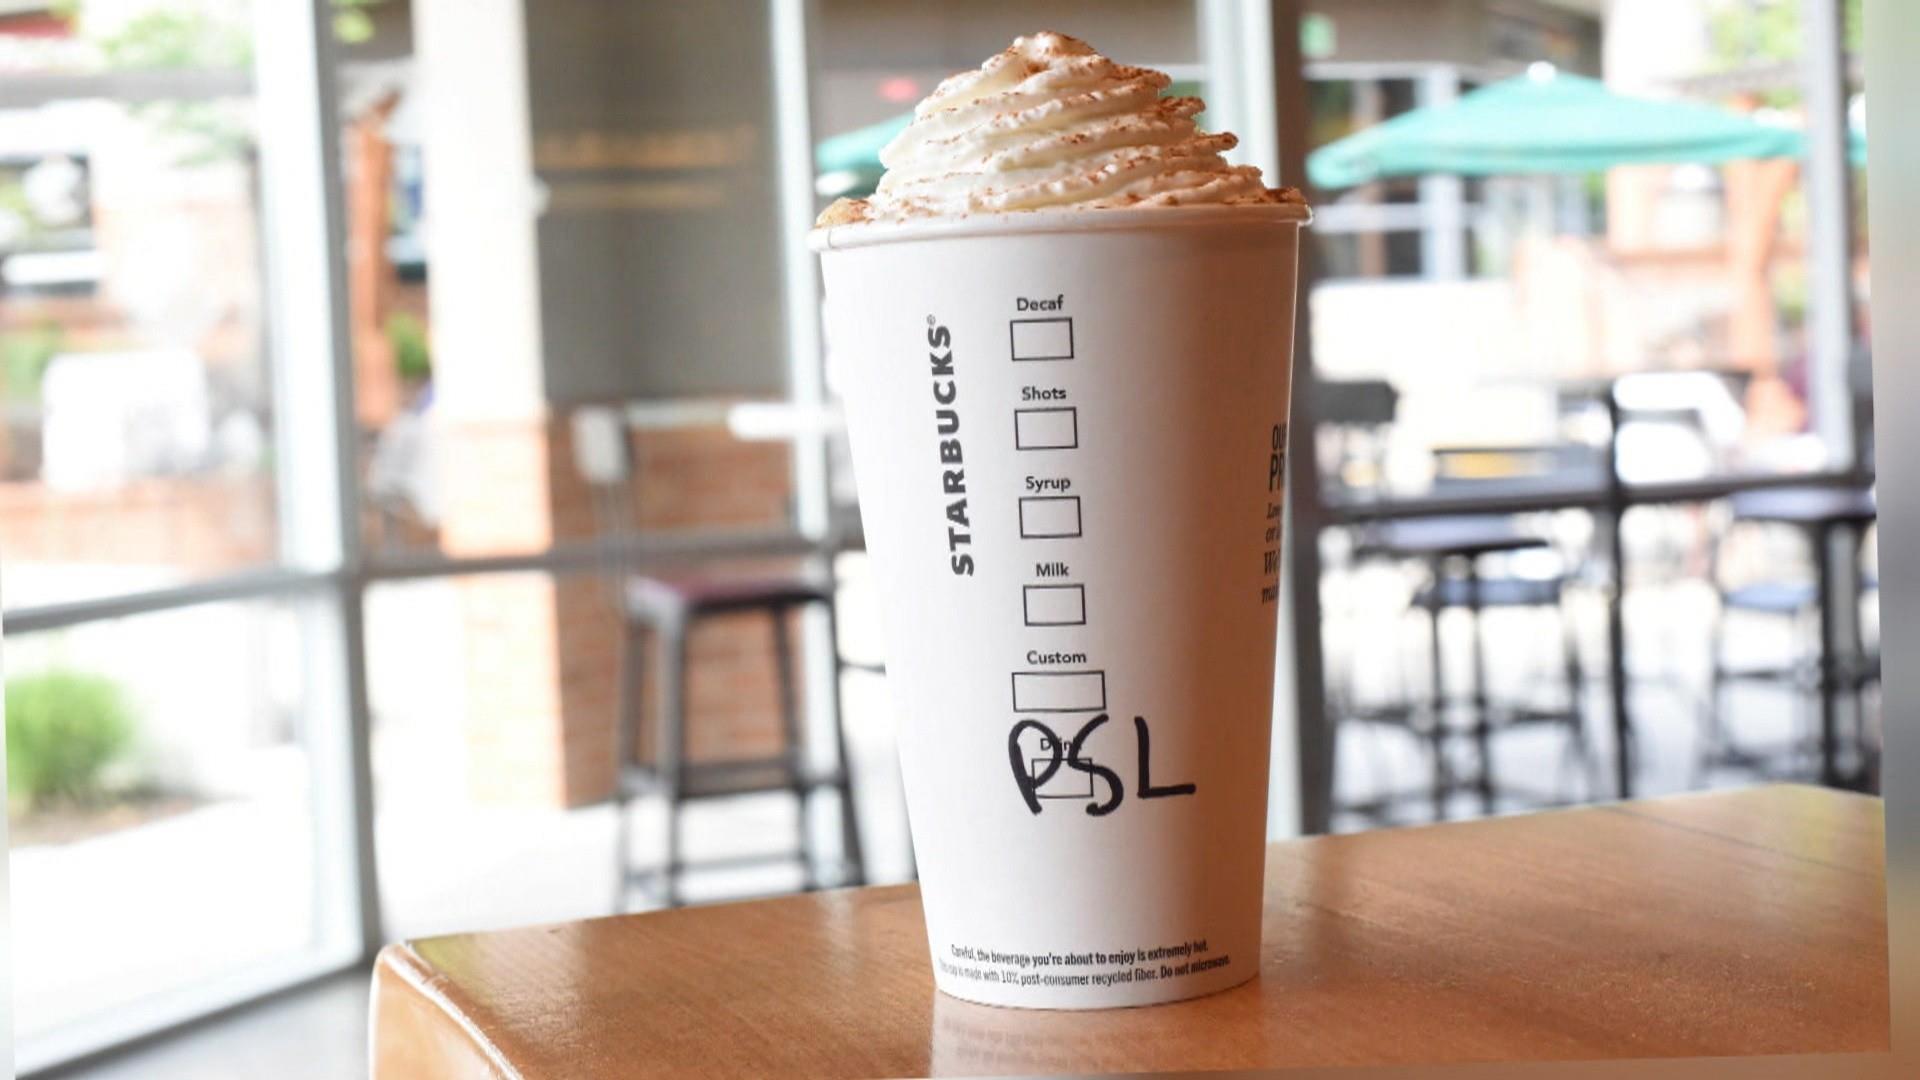 When is Starbucks' Pumpkin Spice Latte available 2019?